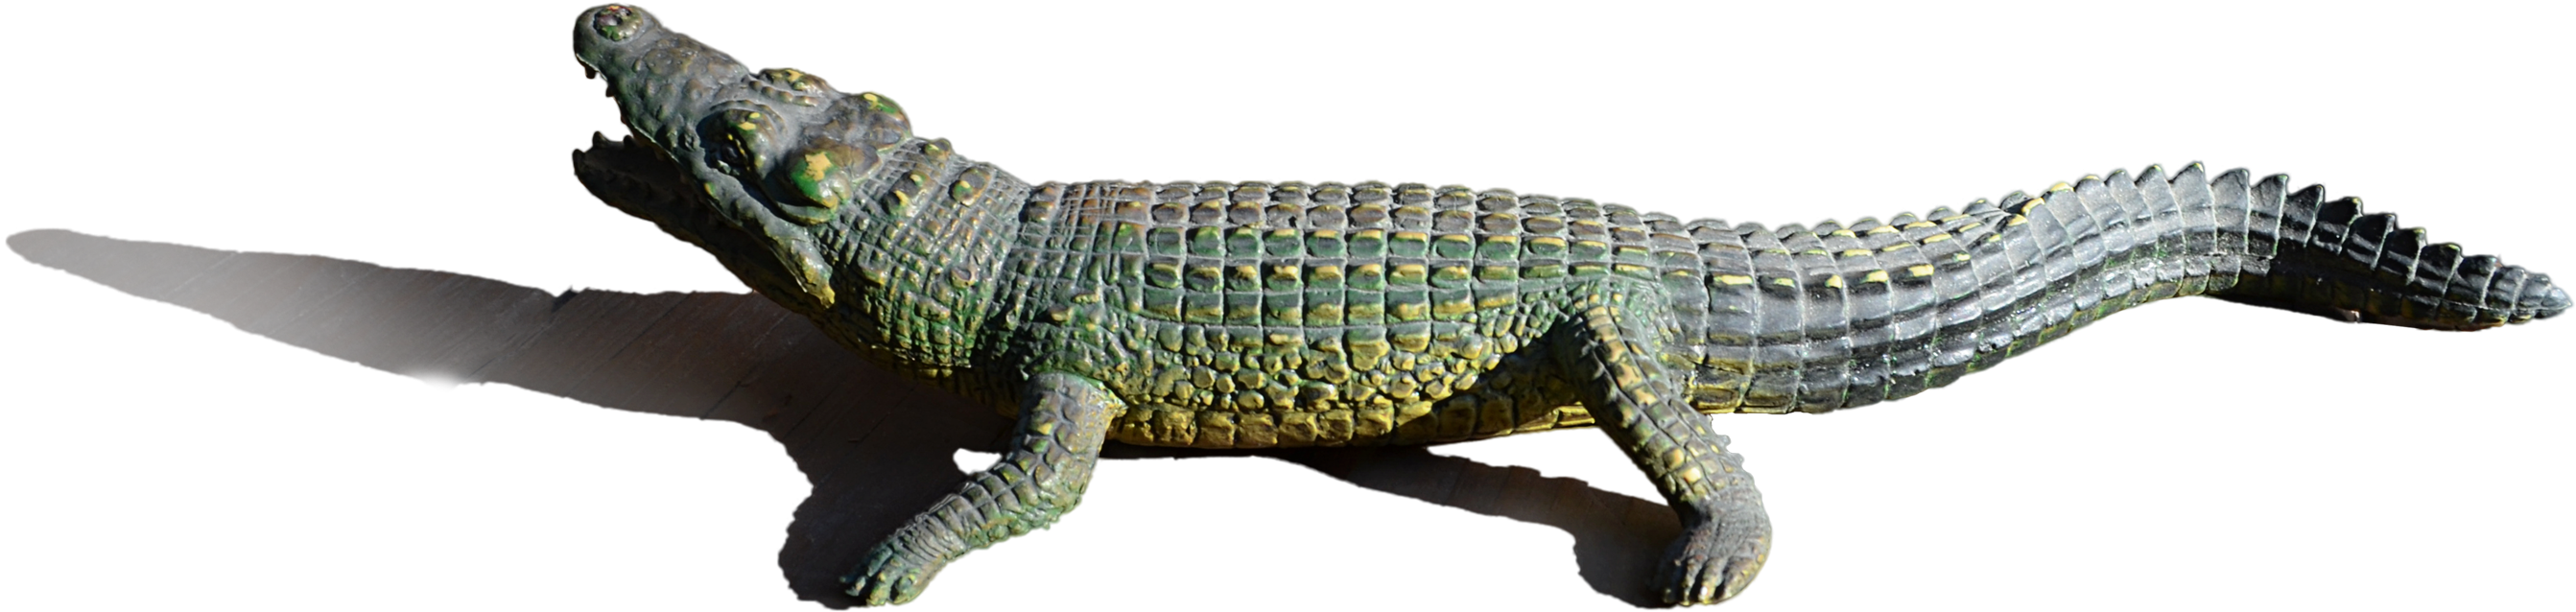 Realistic Alligator Model PNG